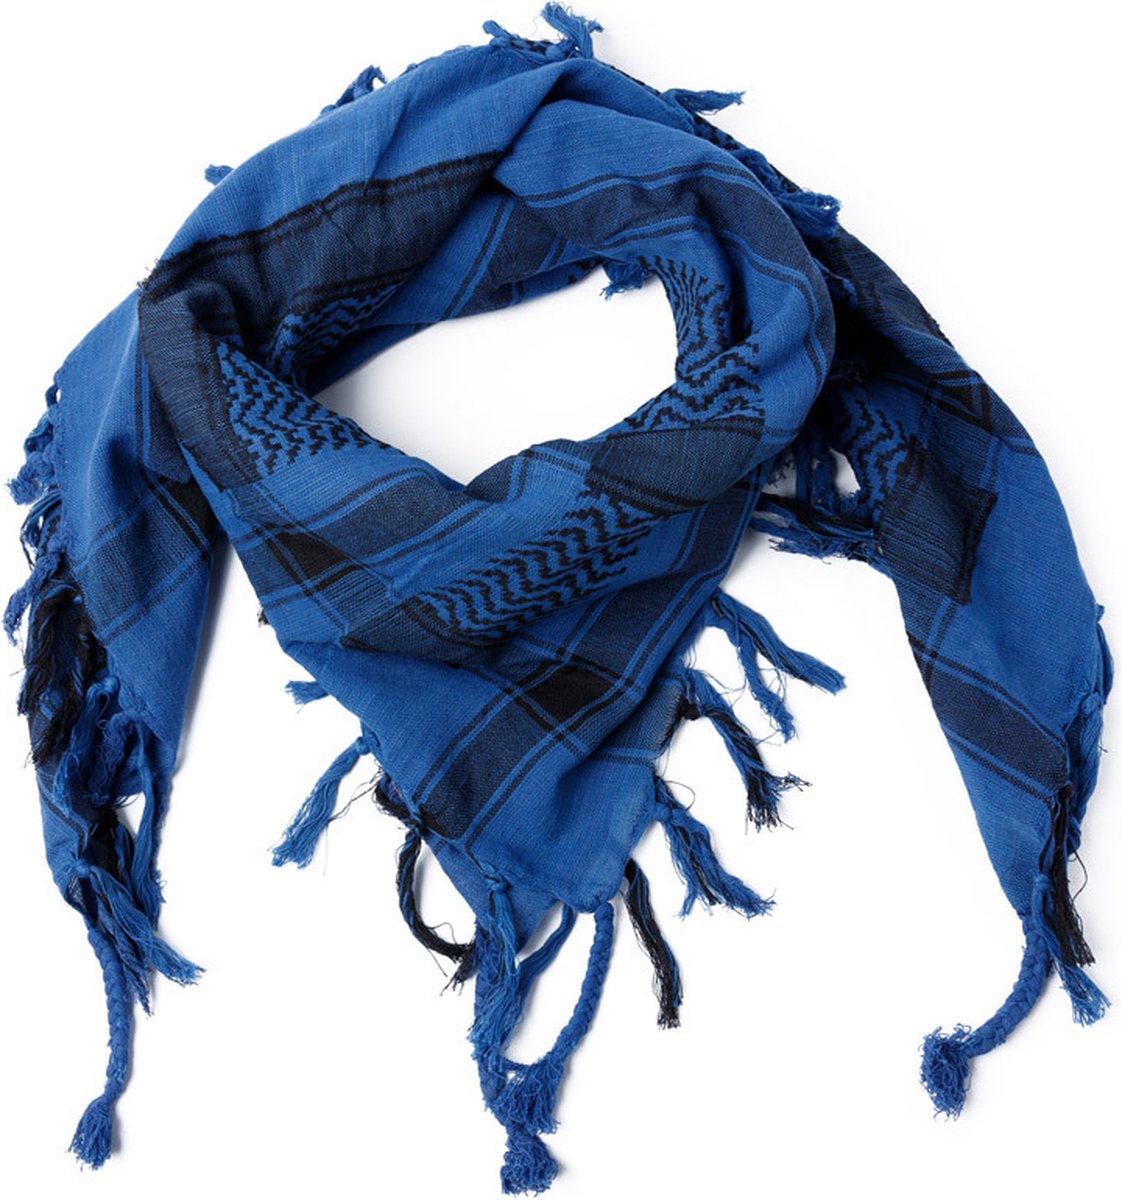 Kufiya - Originele Arafat sjaal - PLO sjaal - Shemagh - Palestijnse sjaal - Blauw Met Zwart - Pali Doek - Hoog Kwaliteit